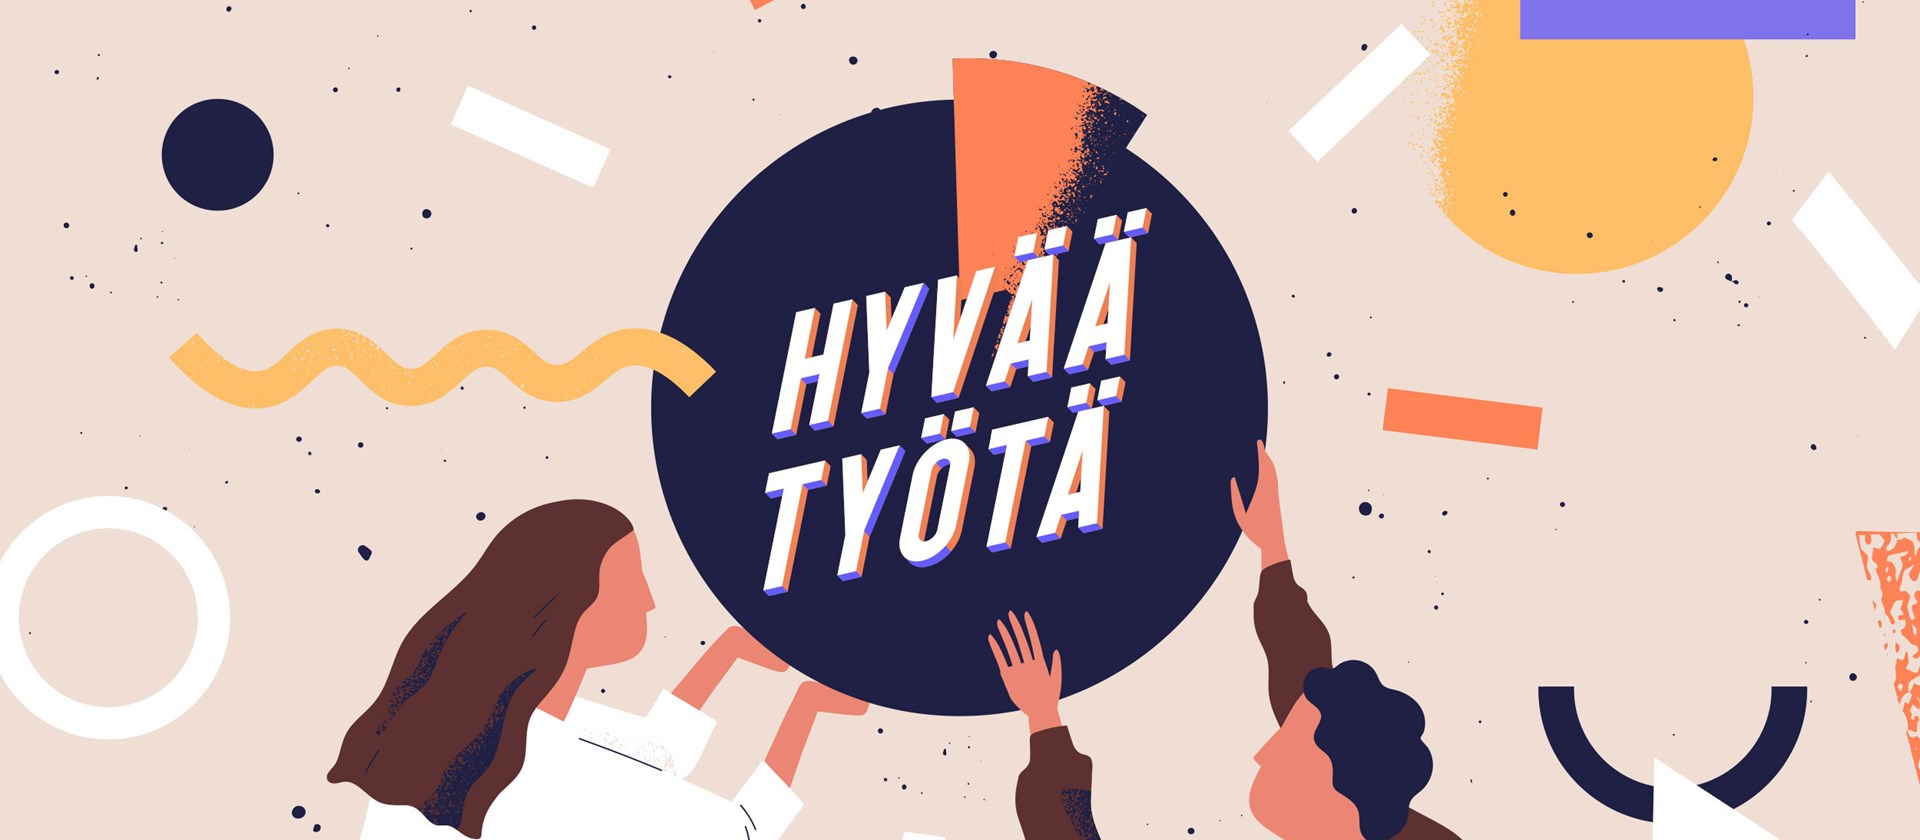 hyvaa-tyota-podcast-header 16-7